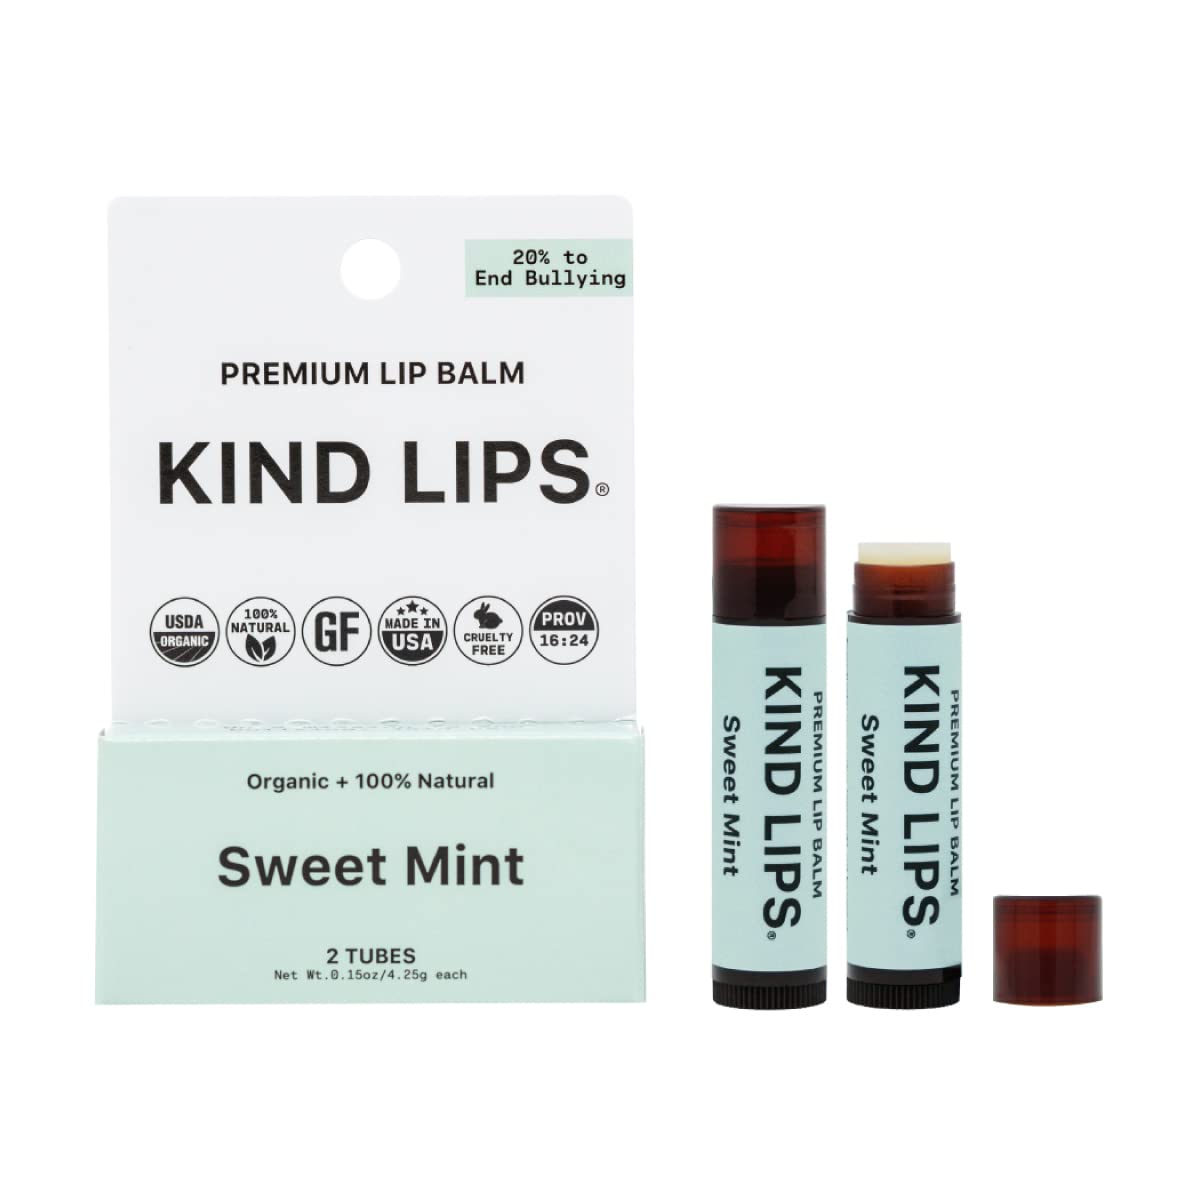 Kind Lips